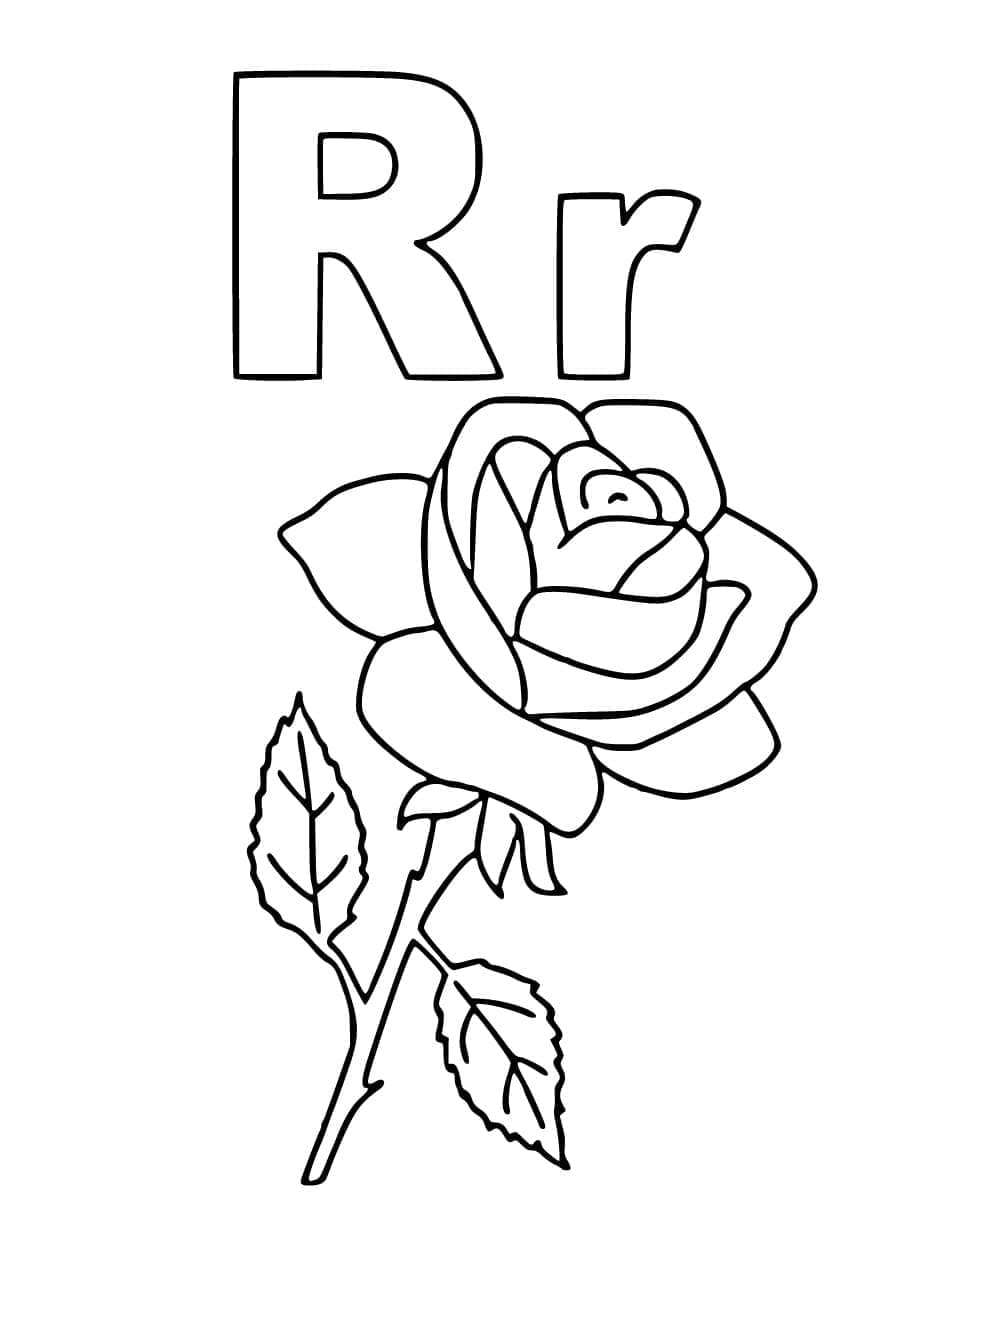 Kolorowanki Litera R jak Róża